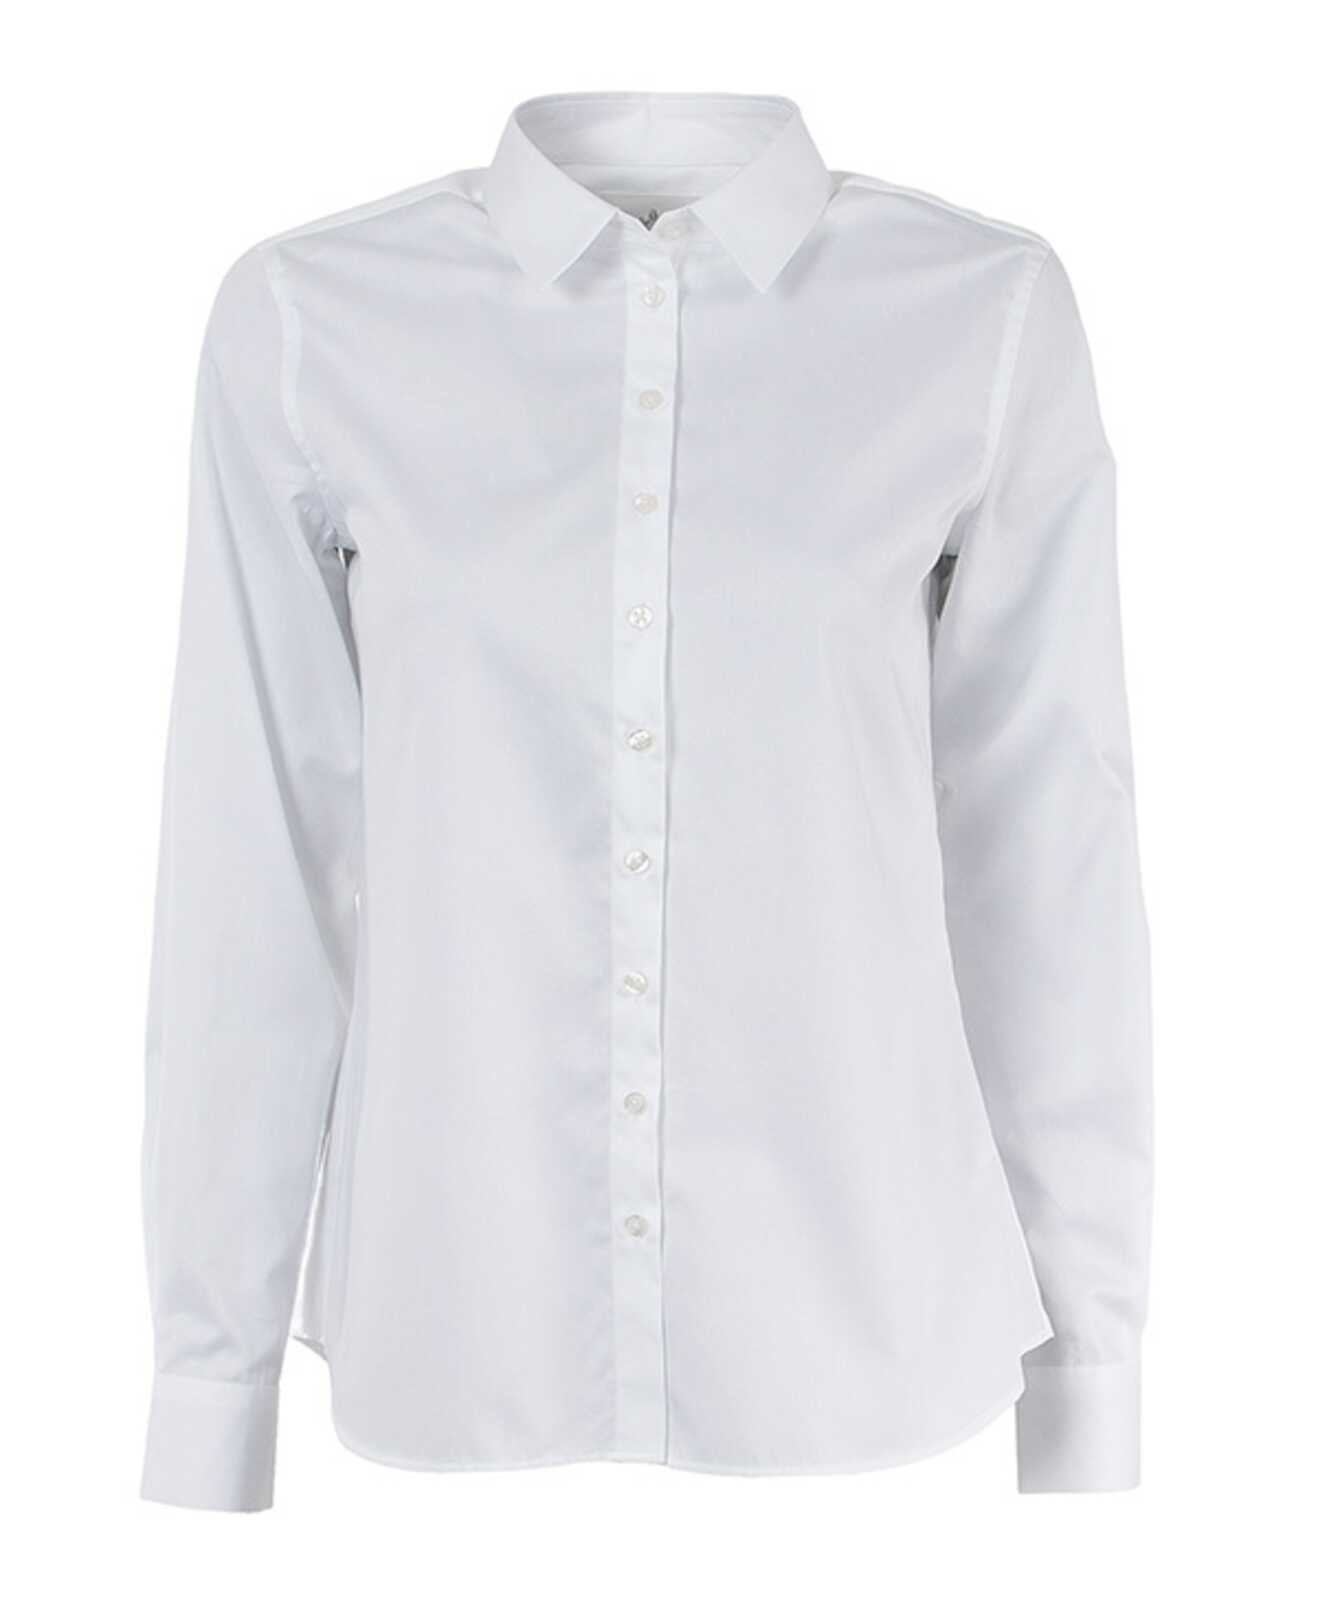 Shirt Tilde Cotton Poplin White The Shirt Factory